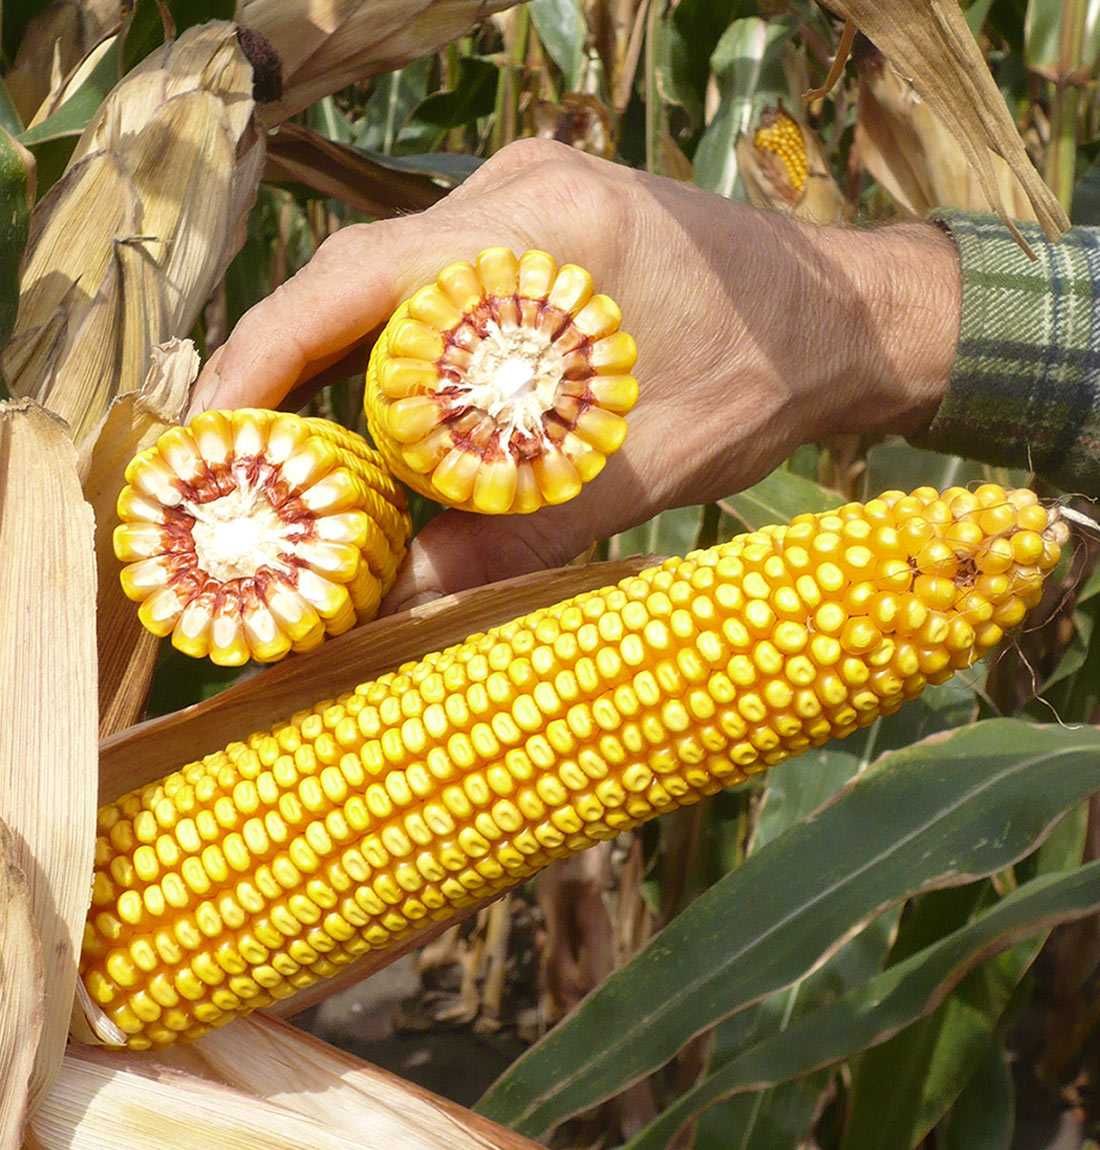 Nasiona kukurydzy CEBIR kiszonka FAO 240 (80 tys. nasion)